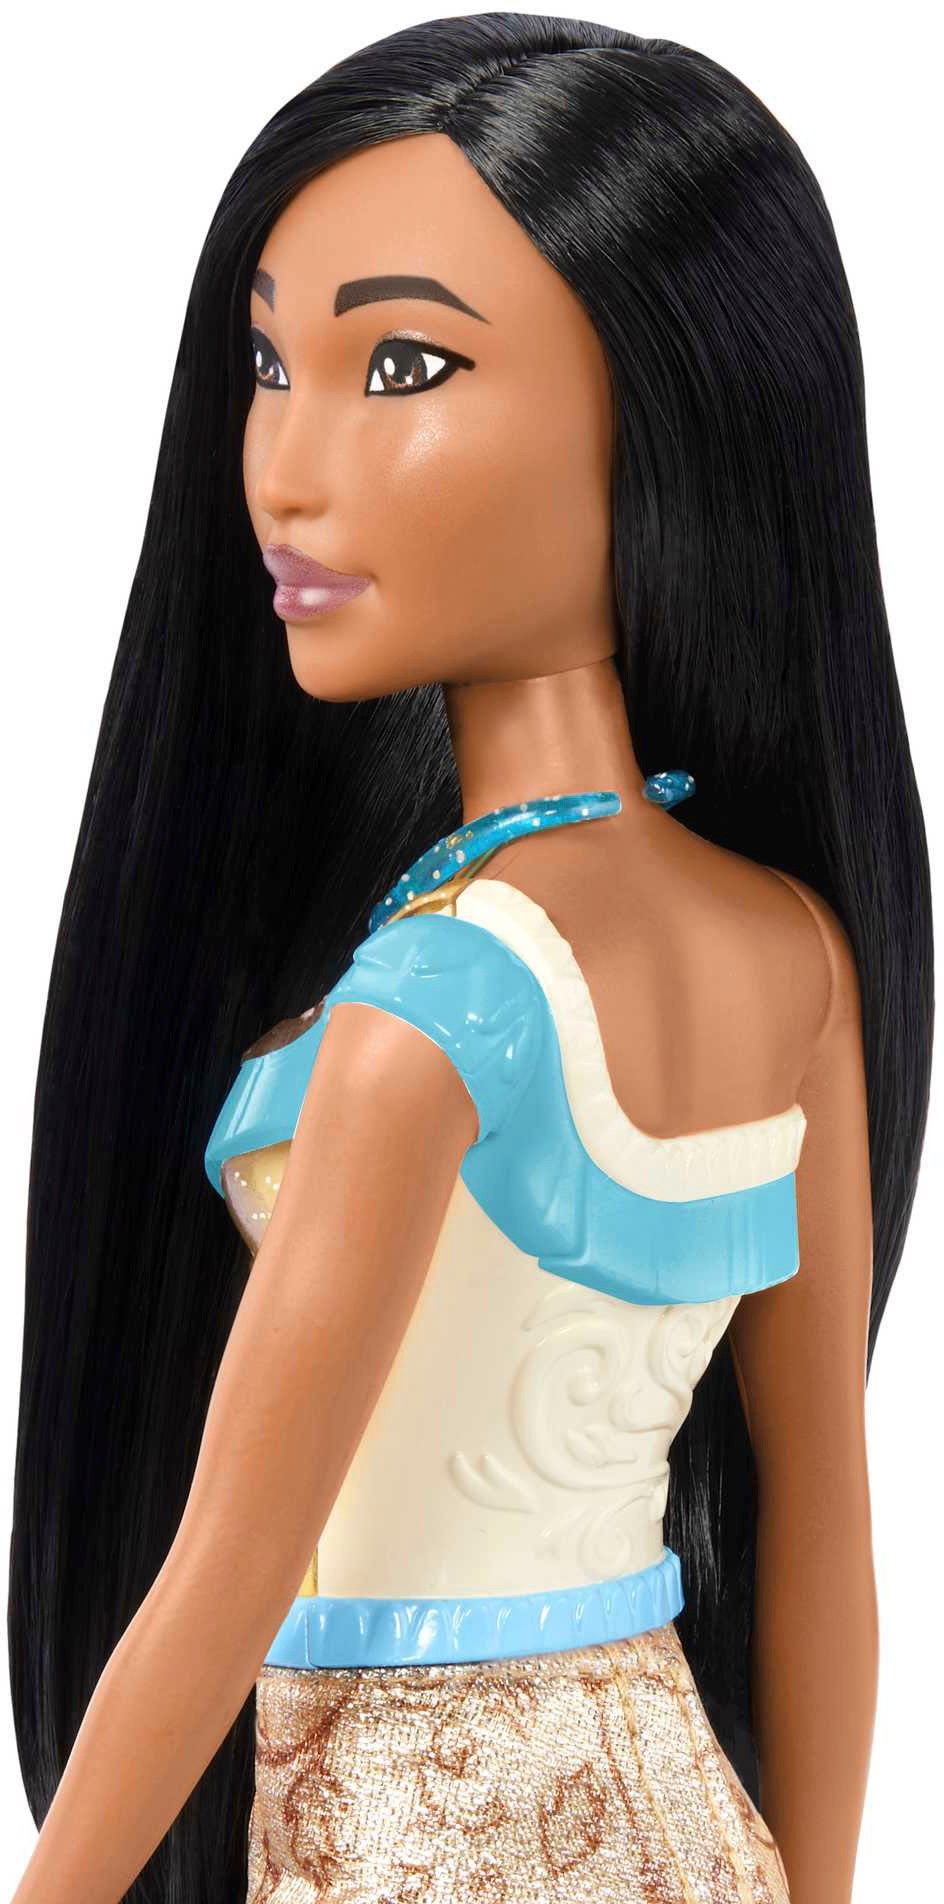 Mattel® Anziehpuppe »Disney Prinzessin, Pocahontas«